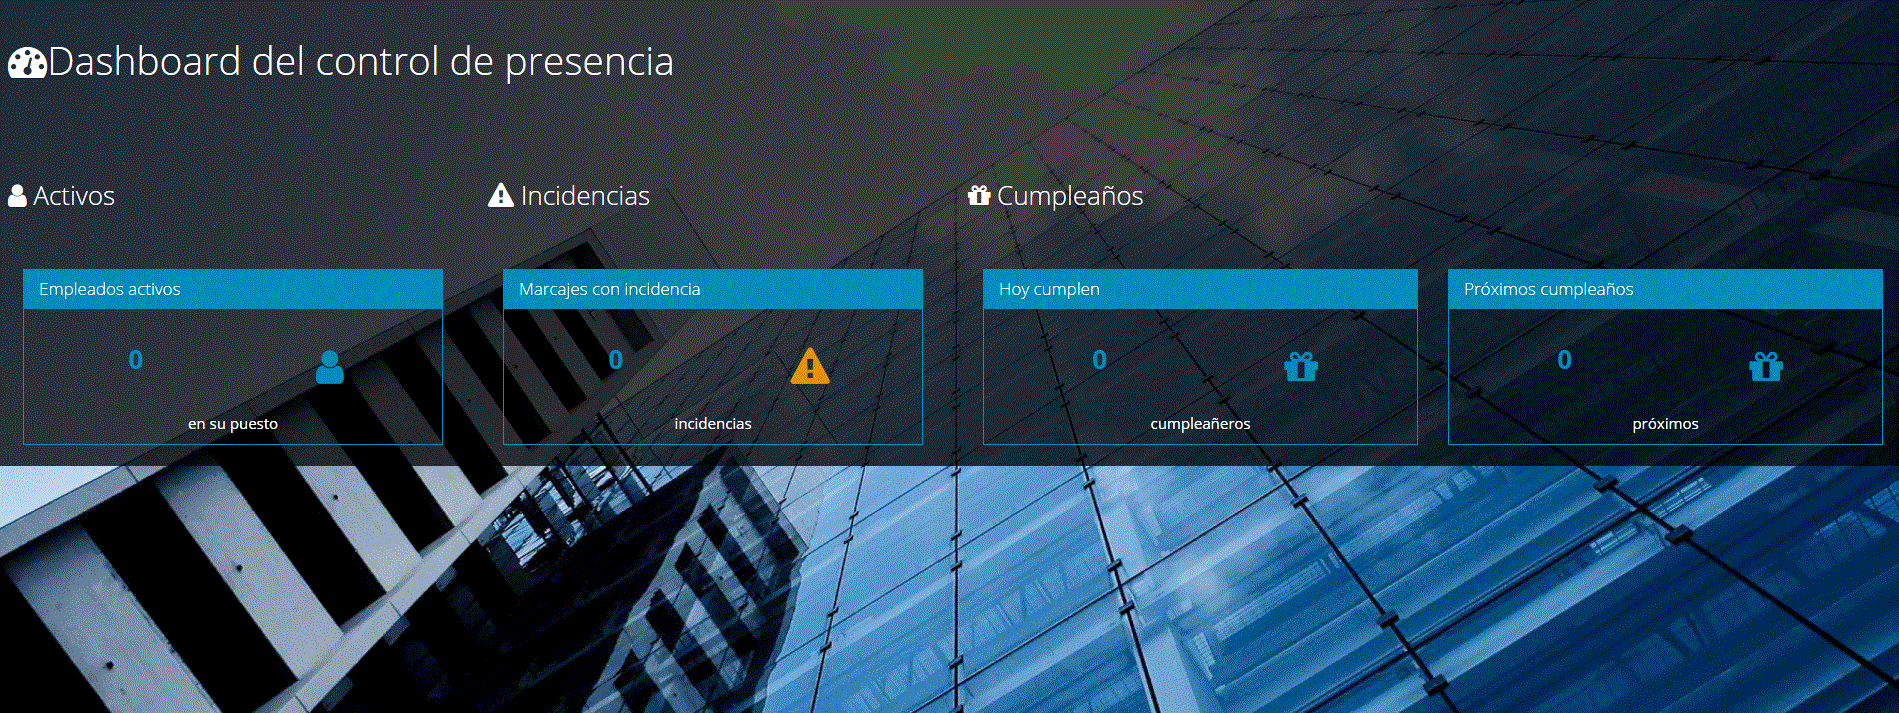 MiFactura.eu - Dashboard del control de presencia